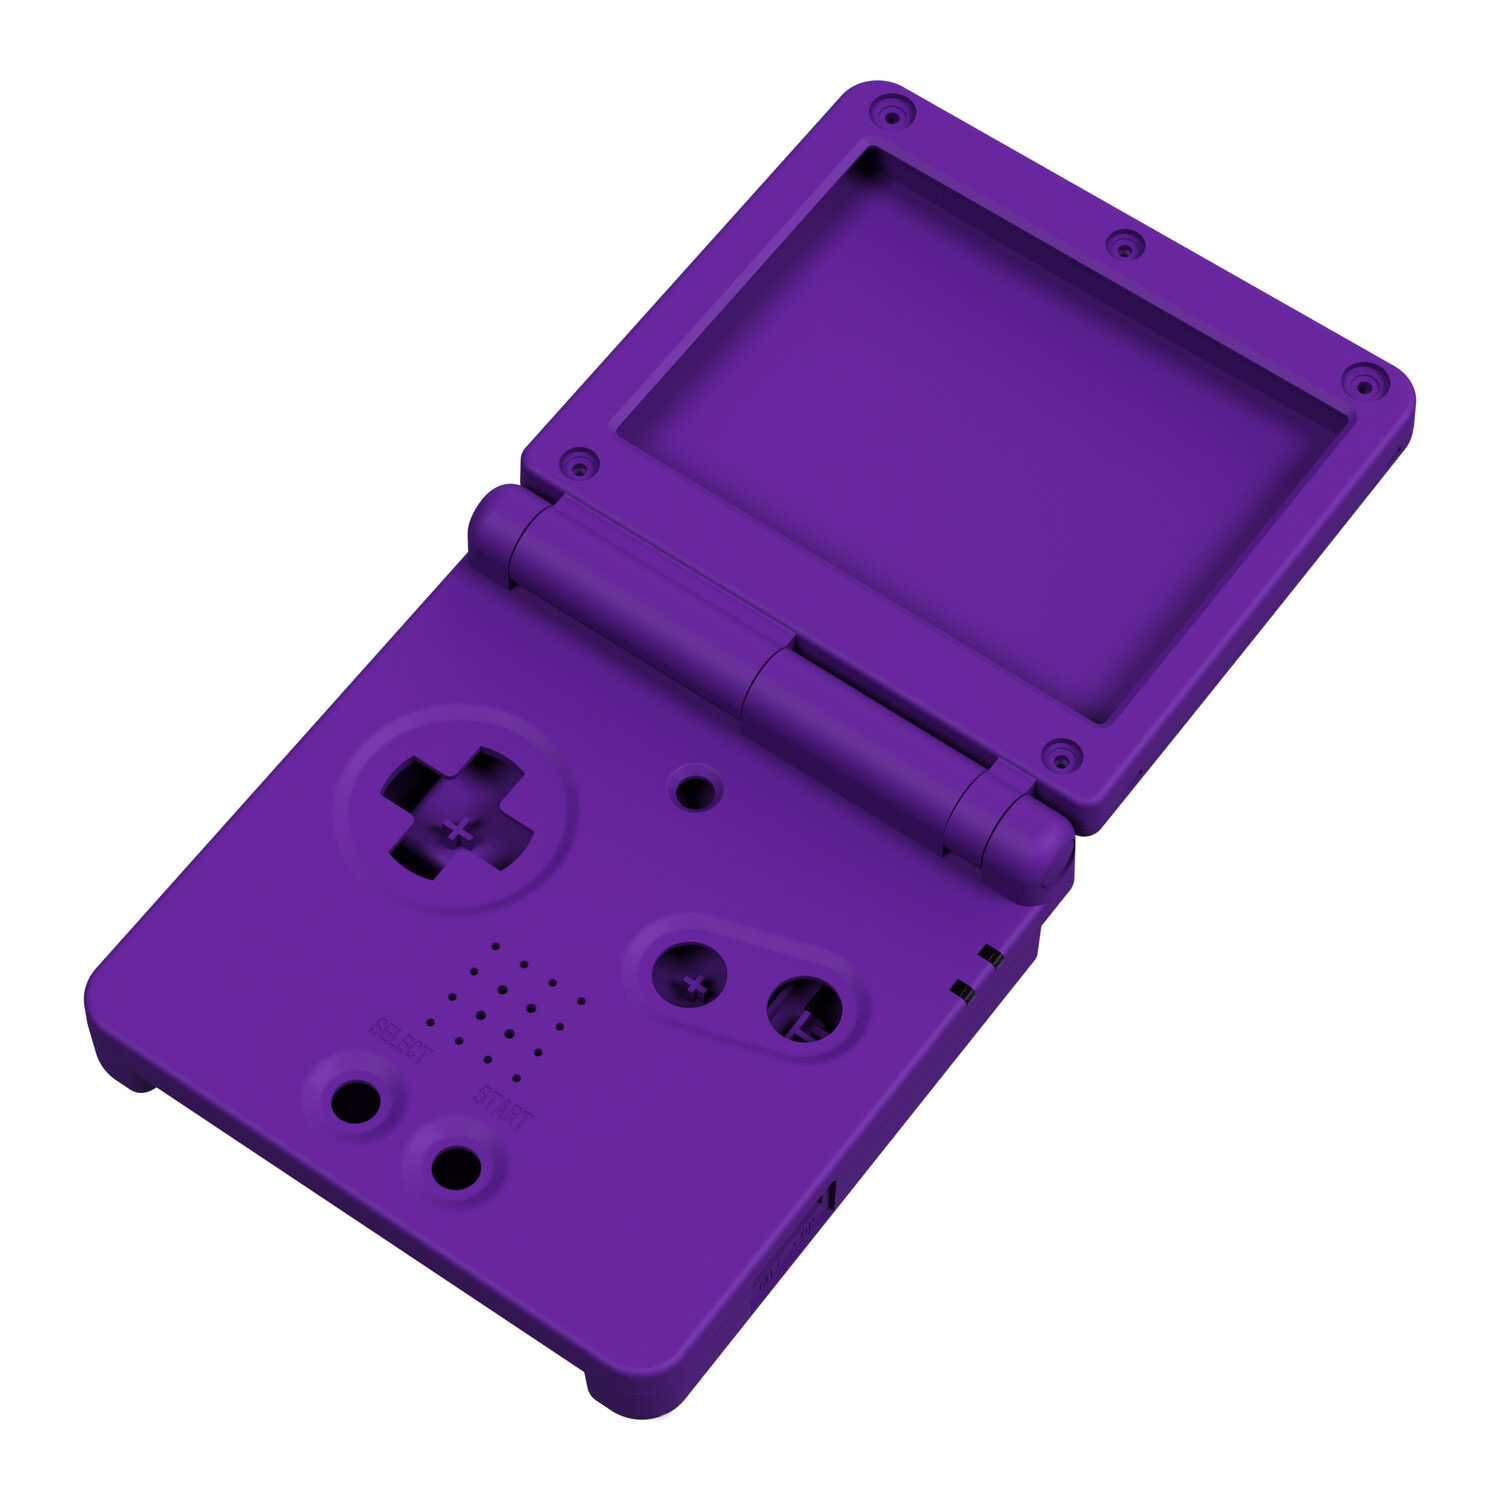 Game Boy Advance SP Etui (Stevig Paars)